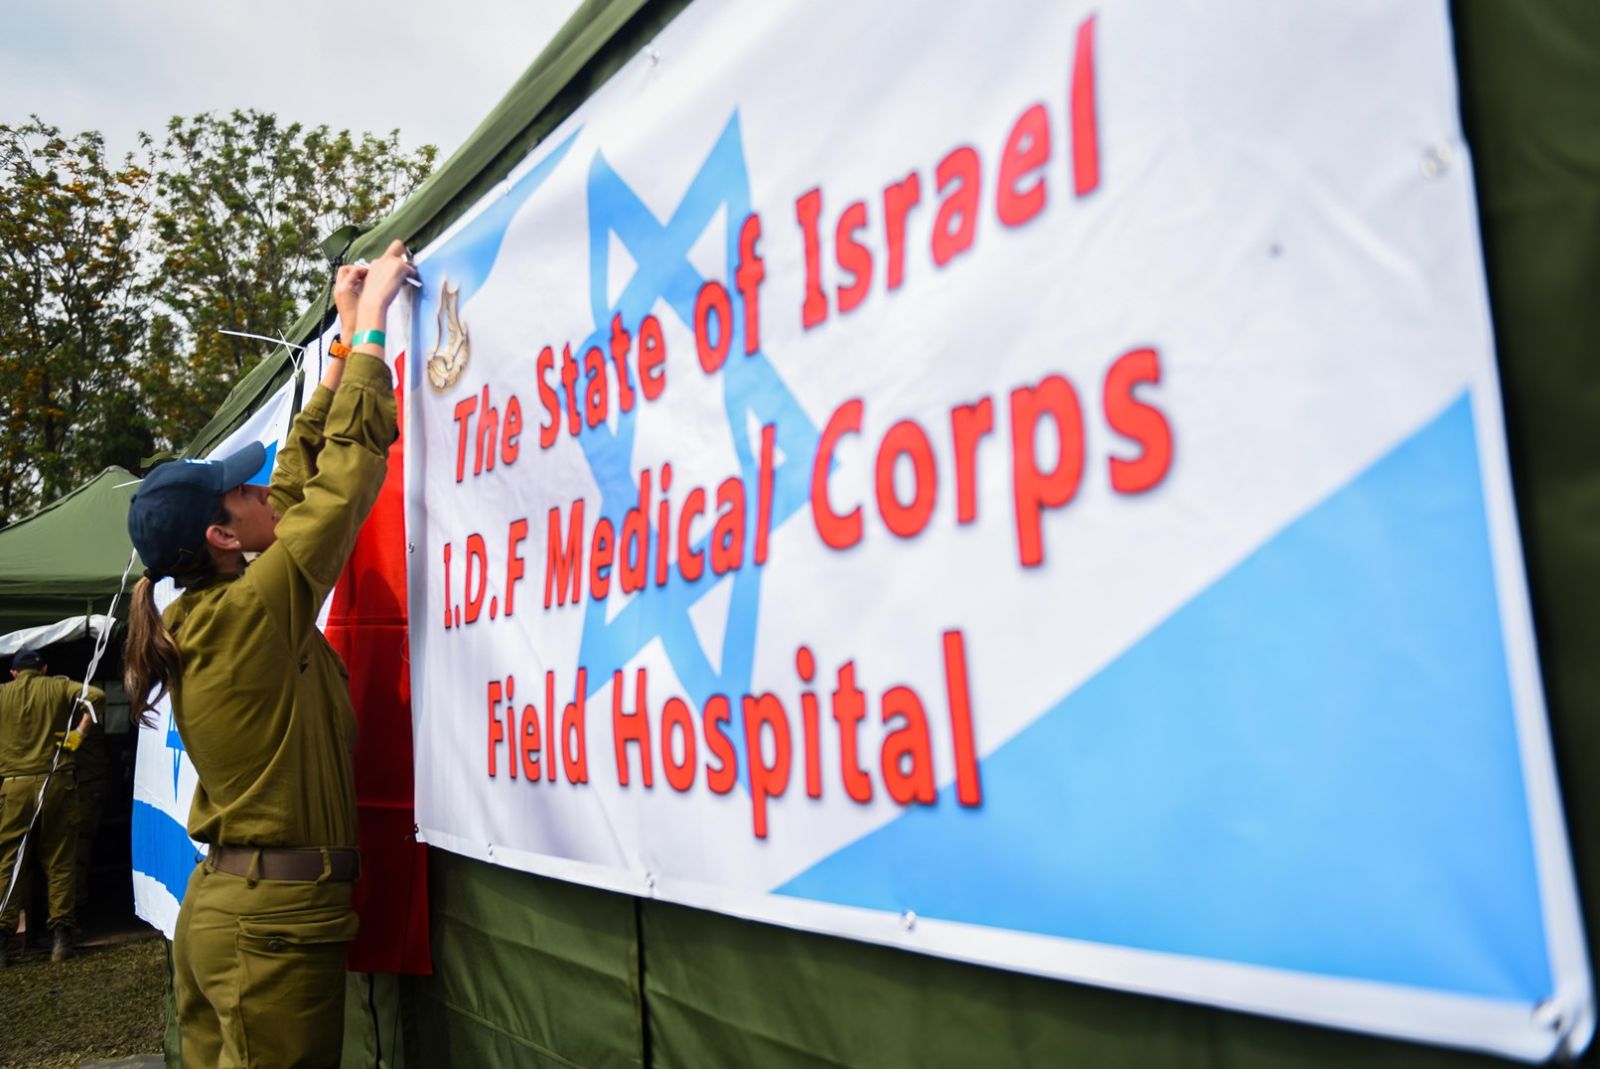 Israeli soldiers establishing a field hospital in Nepal following the earthquake in April 2015. Photo by IDF Spokesperson/FLASH90